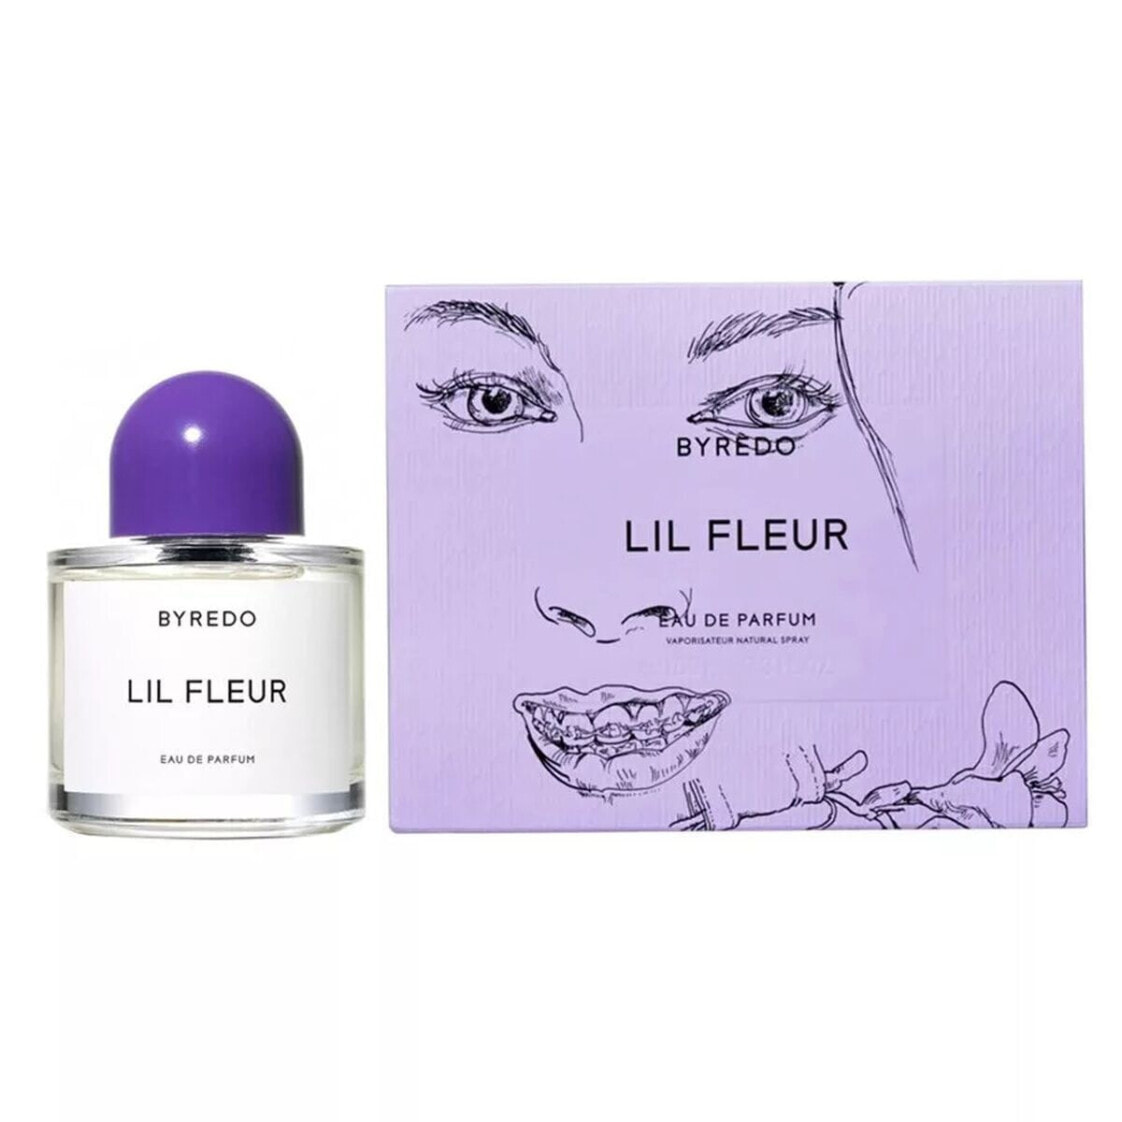 Лил флер. Byredo Lil fleur Limited Edition. Byredo Lilly fleur. Byredo Lil fleur EDP 50 ml. Парфюм Byredo Lil fleur Cassis 100ml.